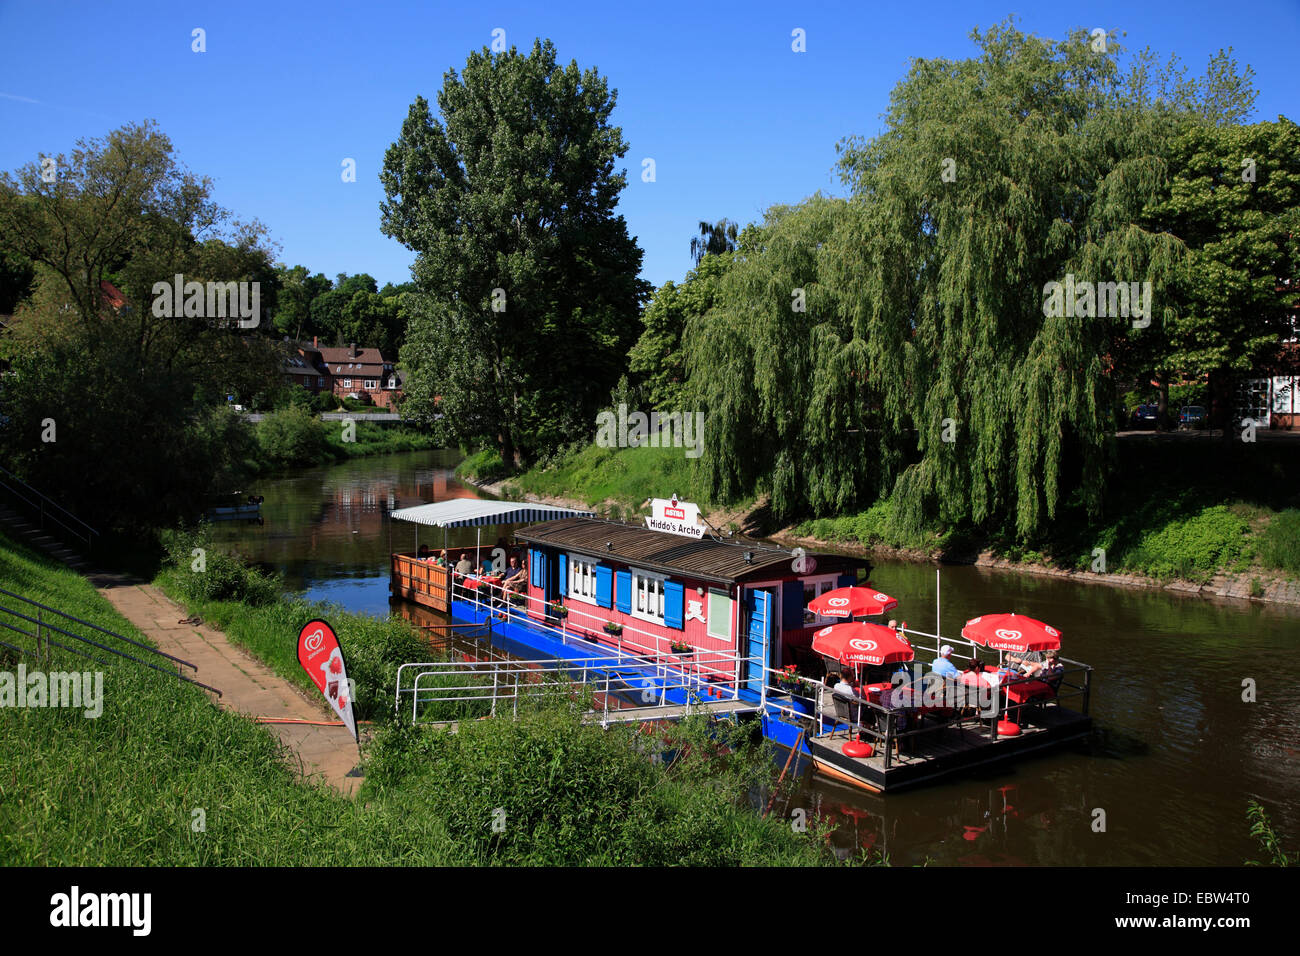 Swimming Restaurant  HIDDOS ARCHE on river  Jeetzel, Hitzacker / Elbe, Wendland, Lower Saxony, Germany, Europe Stock Photo